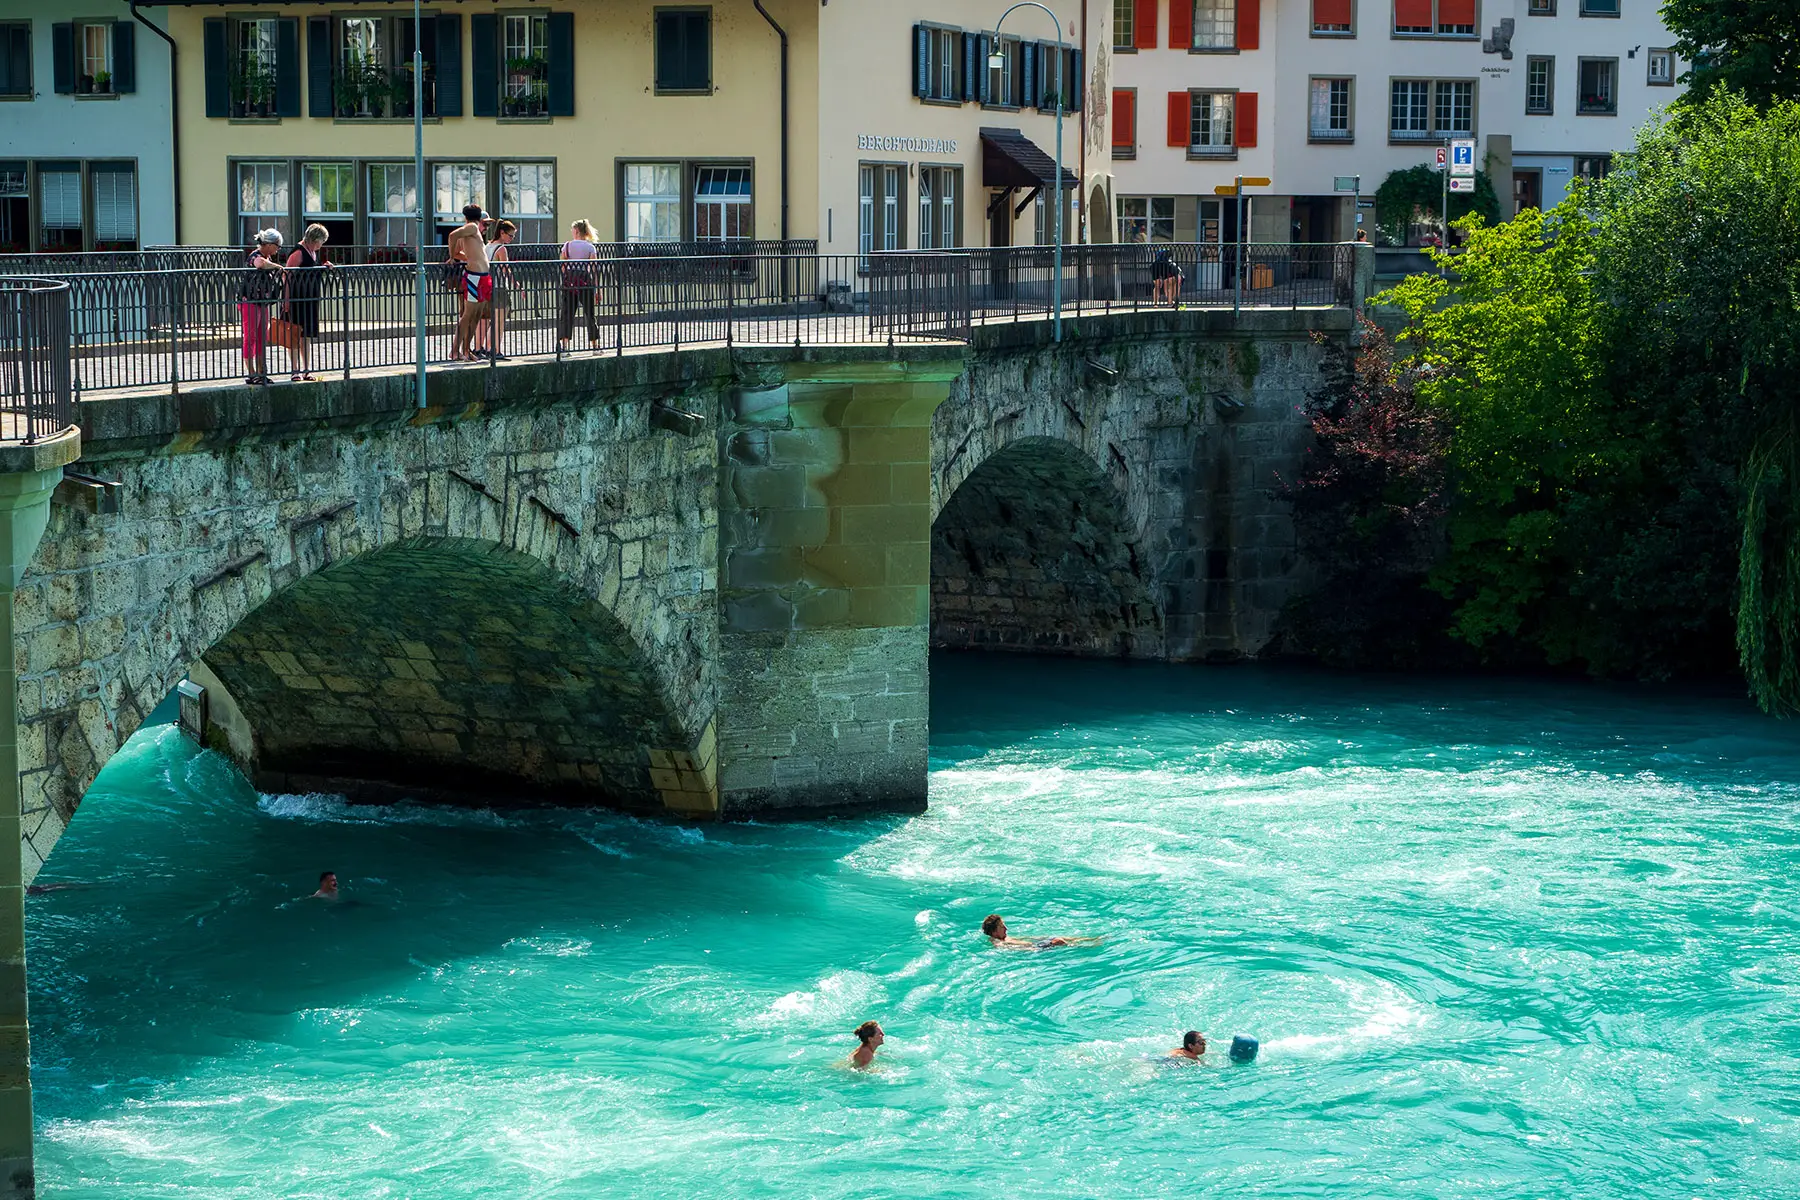 Swimmers in the Aare River in Bern, Switzerland